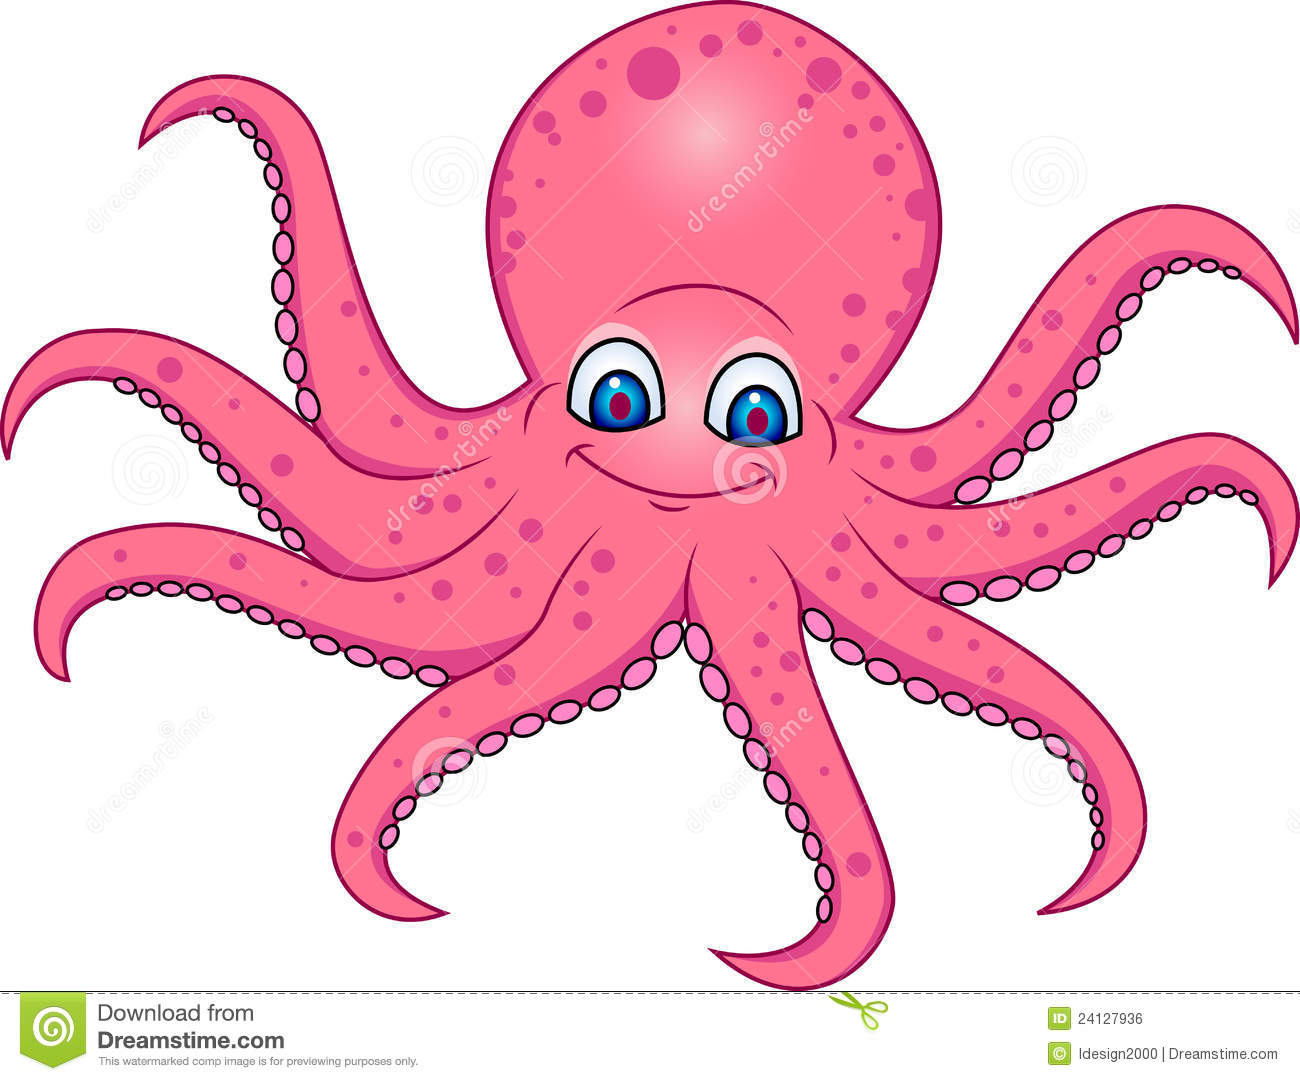 Royalty Free Stock Image  Octopus Cartoon  Image  24127936